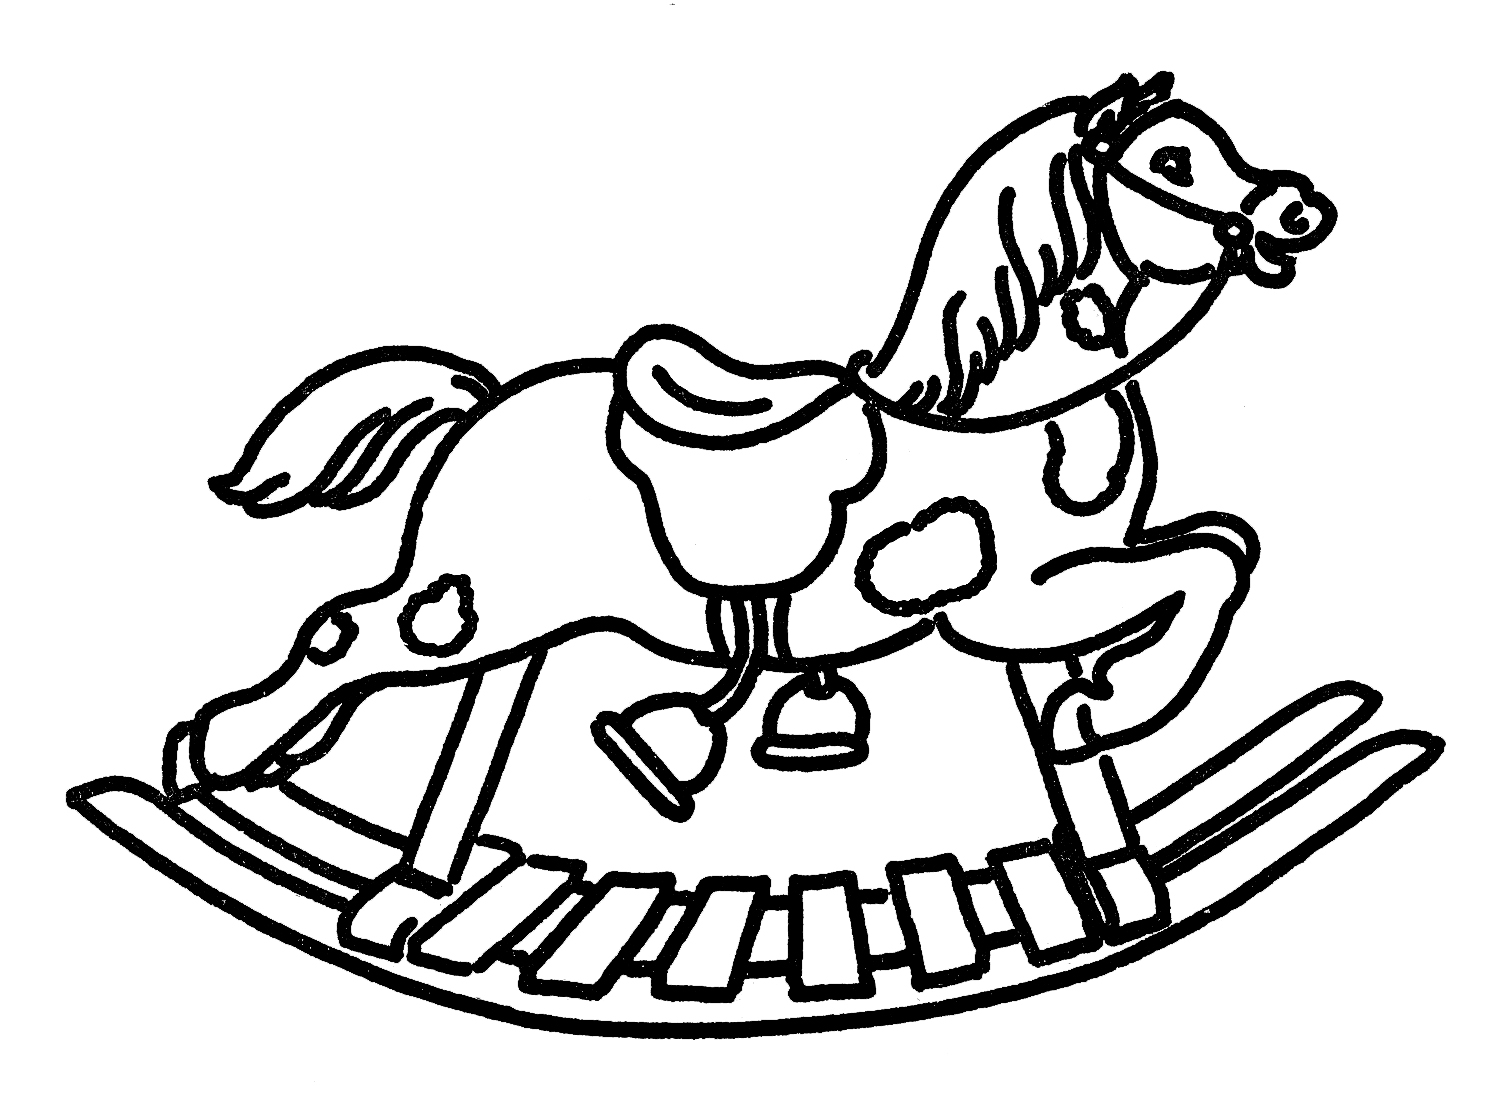 Vintage Line Art Rocking Horse - The Graphics Fairy